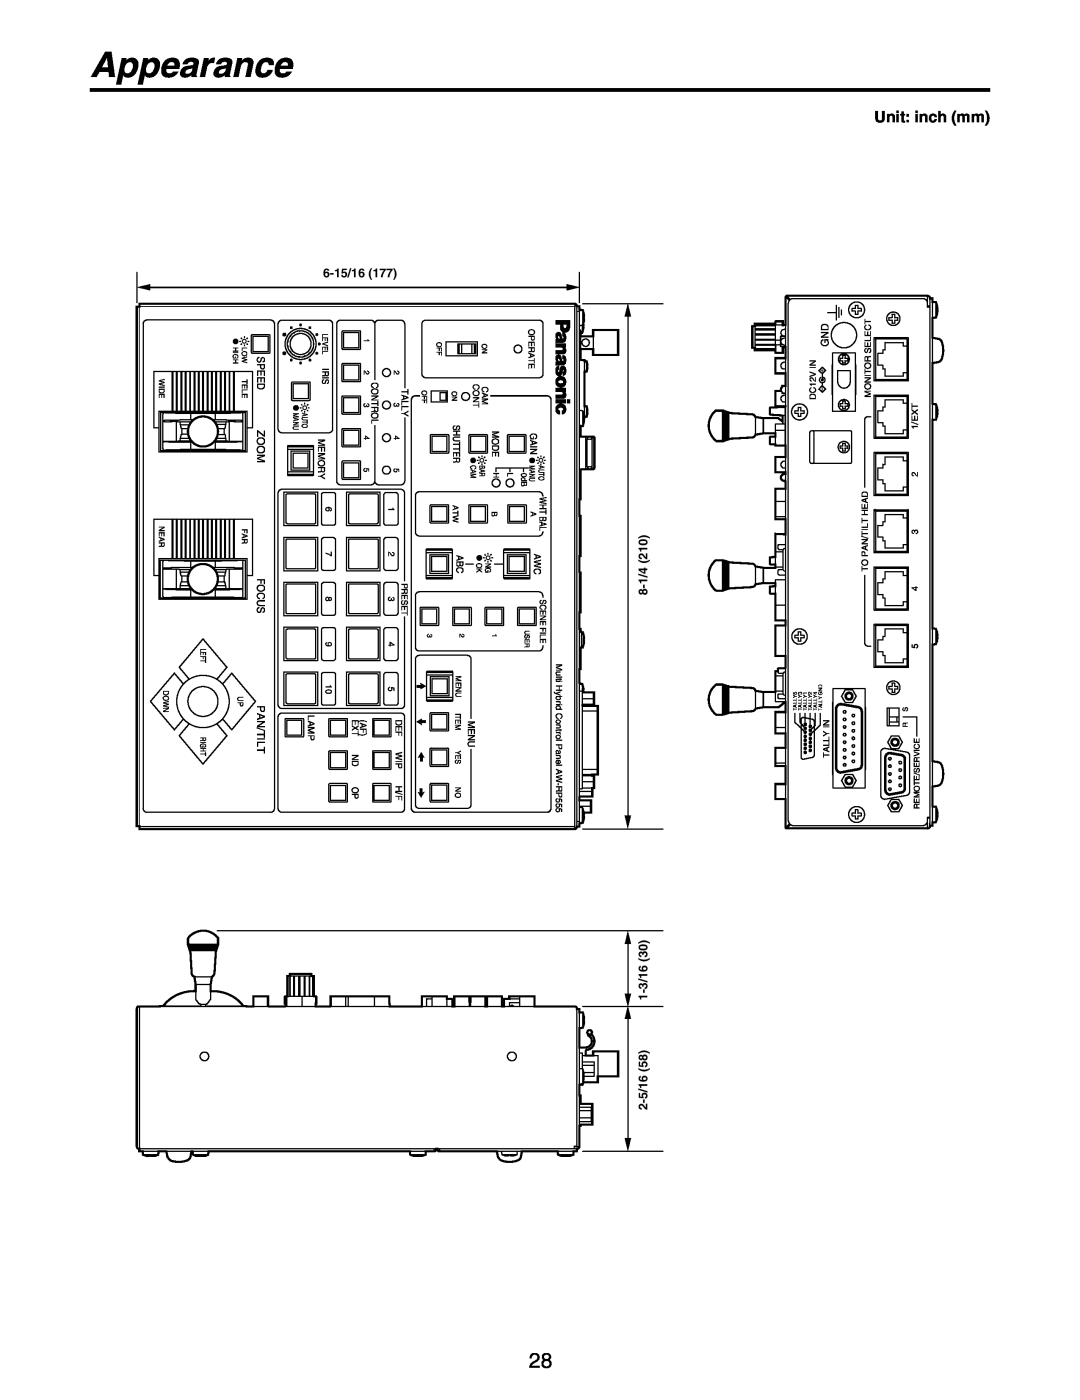 Panasonic AW-RP555N manual Appearance, 6-15/16177, 2-5/1658 1-3/1630, Zoom, Pan/Tilt 